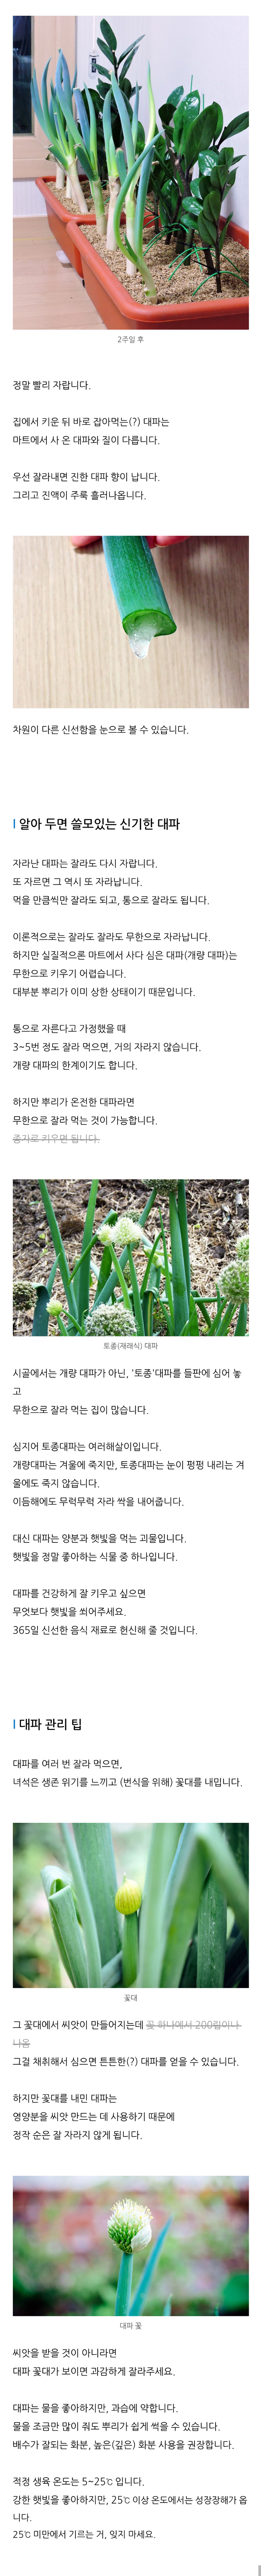 spring_onion_03.jpg